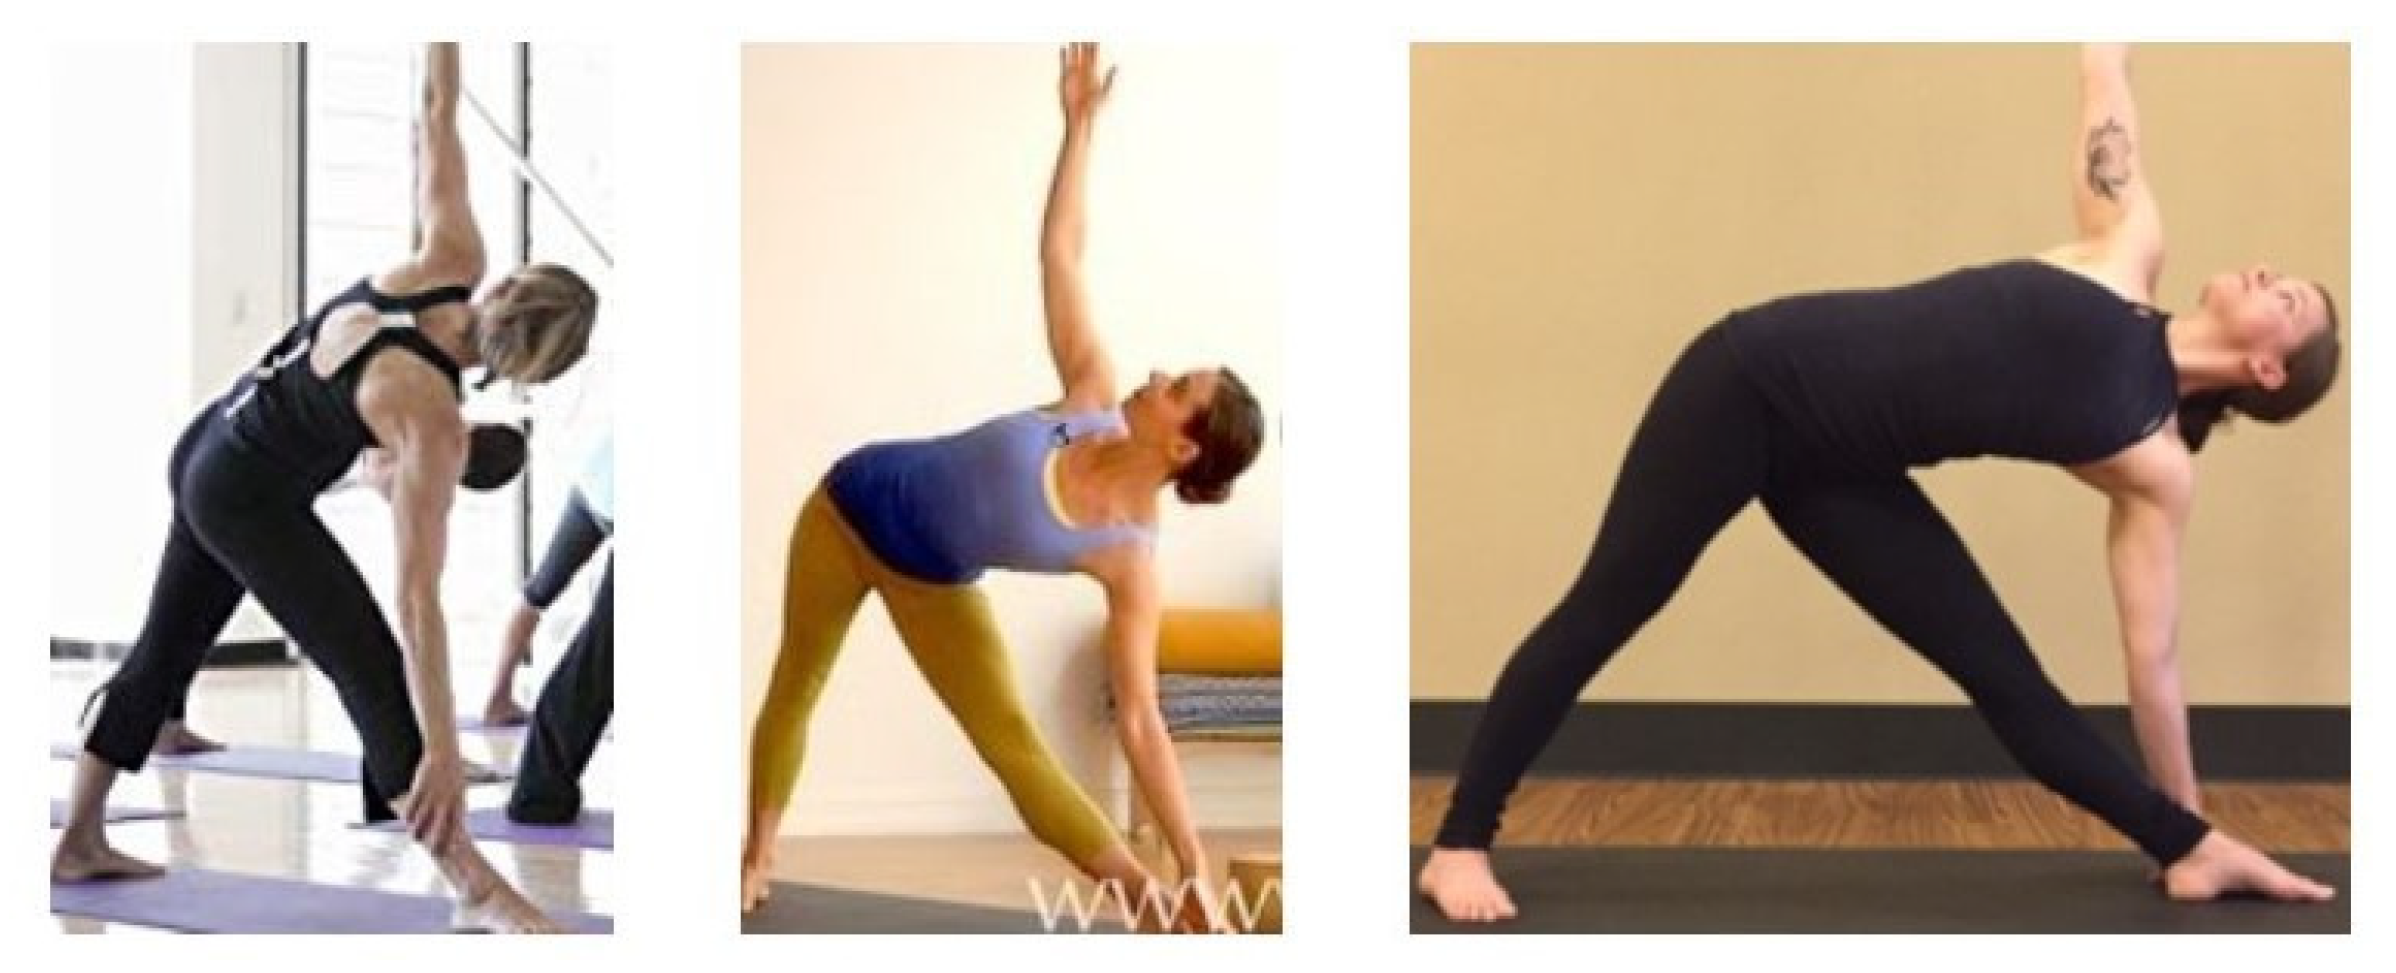 Yoga Pose | Hot Yoga and Pilates